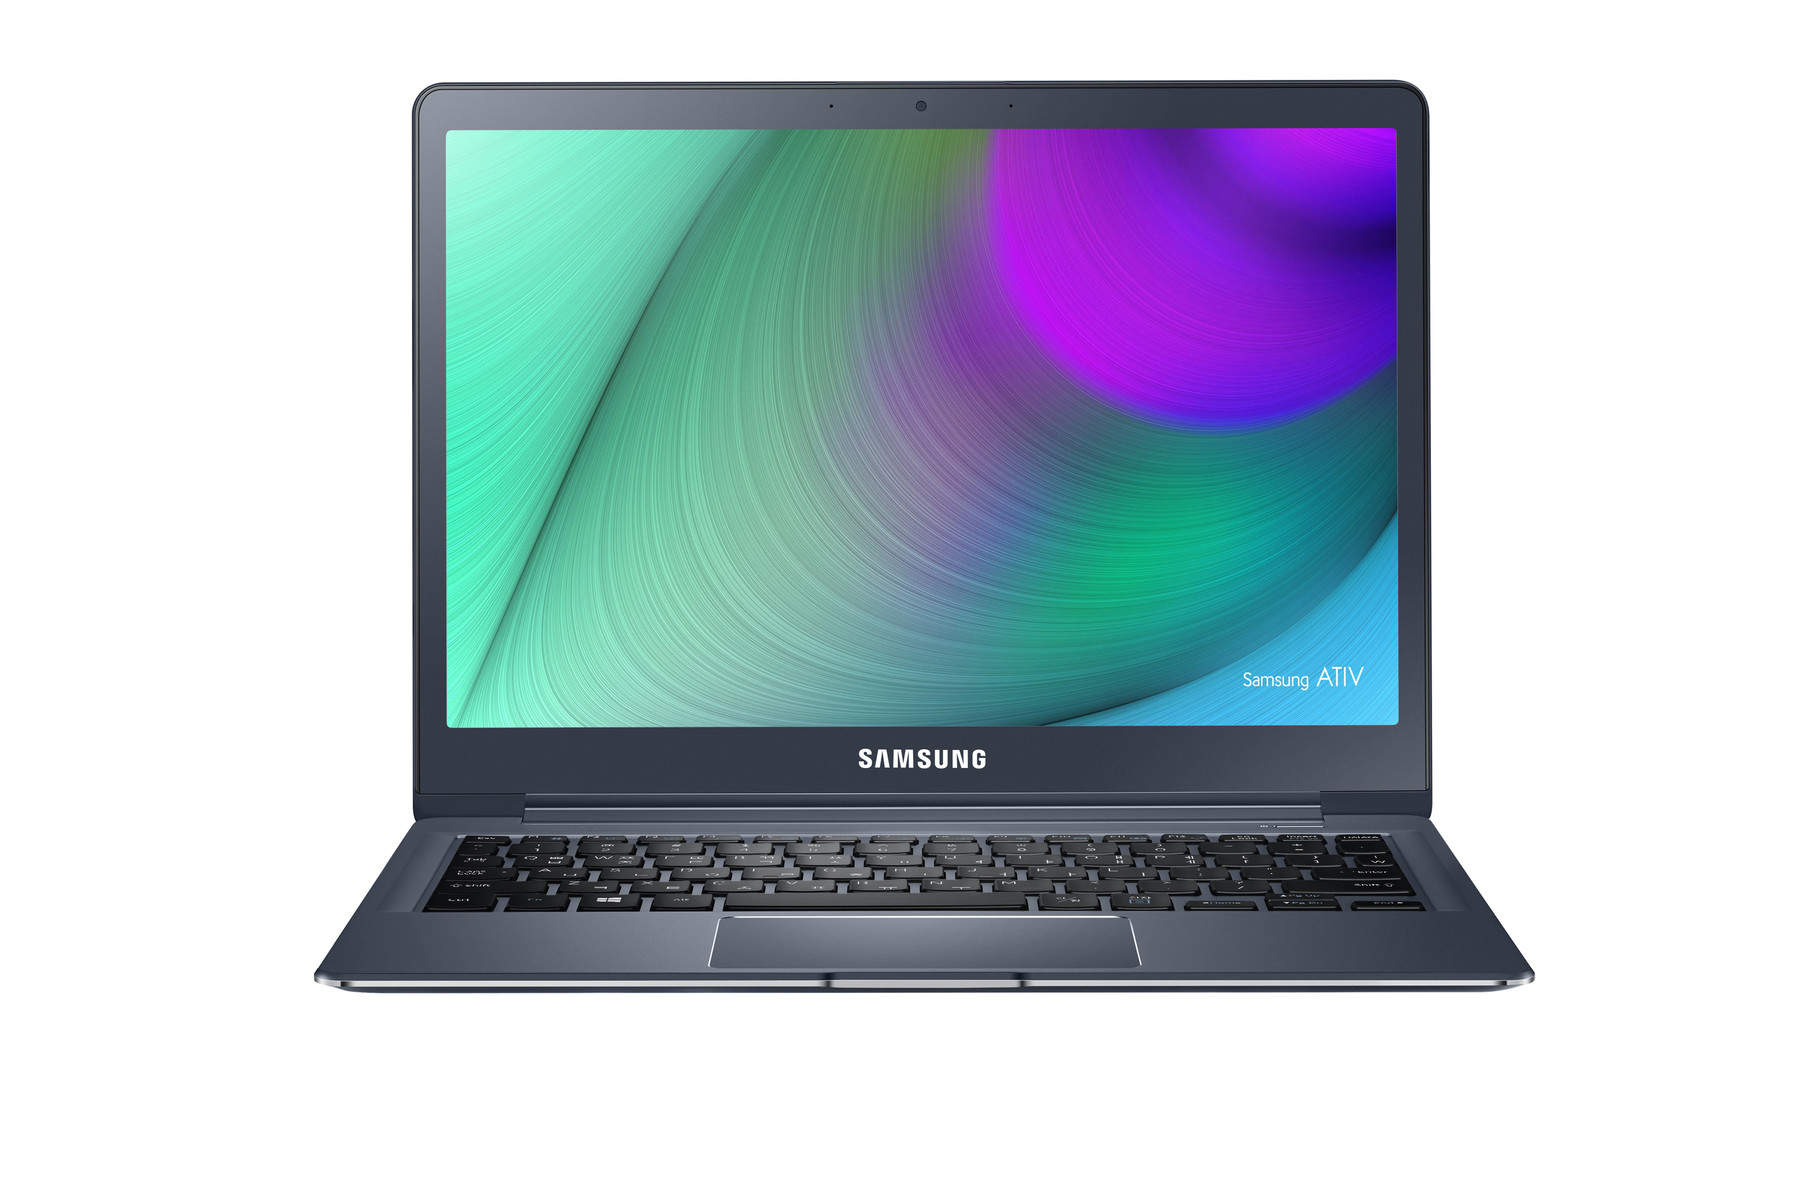 Samsung unveils the 2015 ATIV Book 9 ultraportable laptop